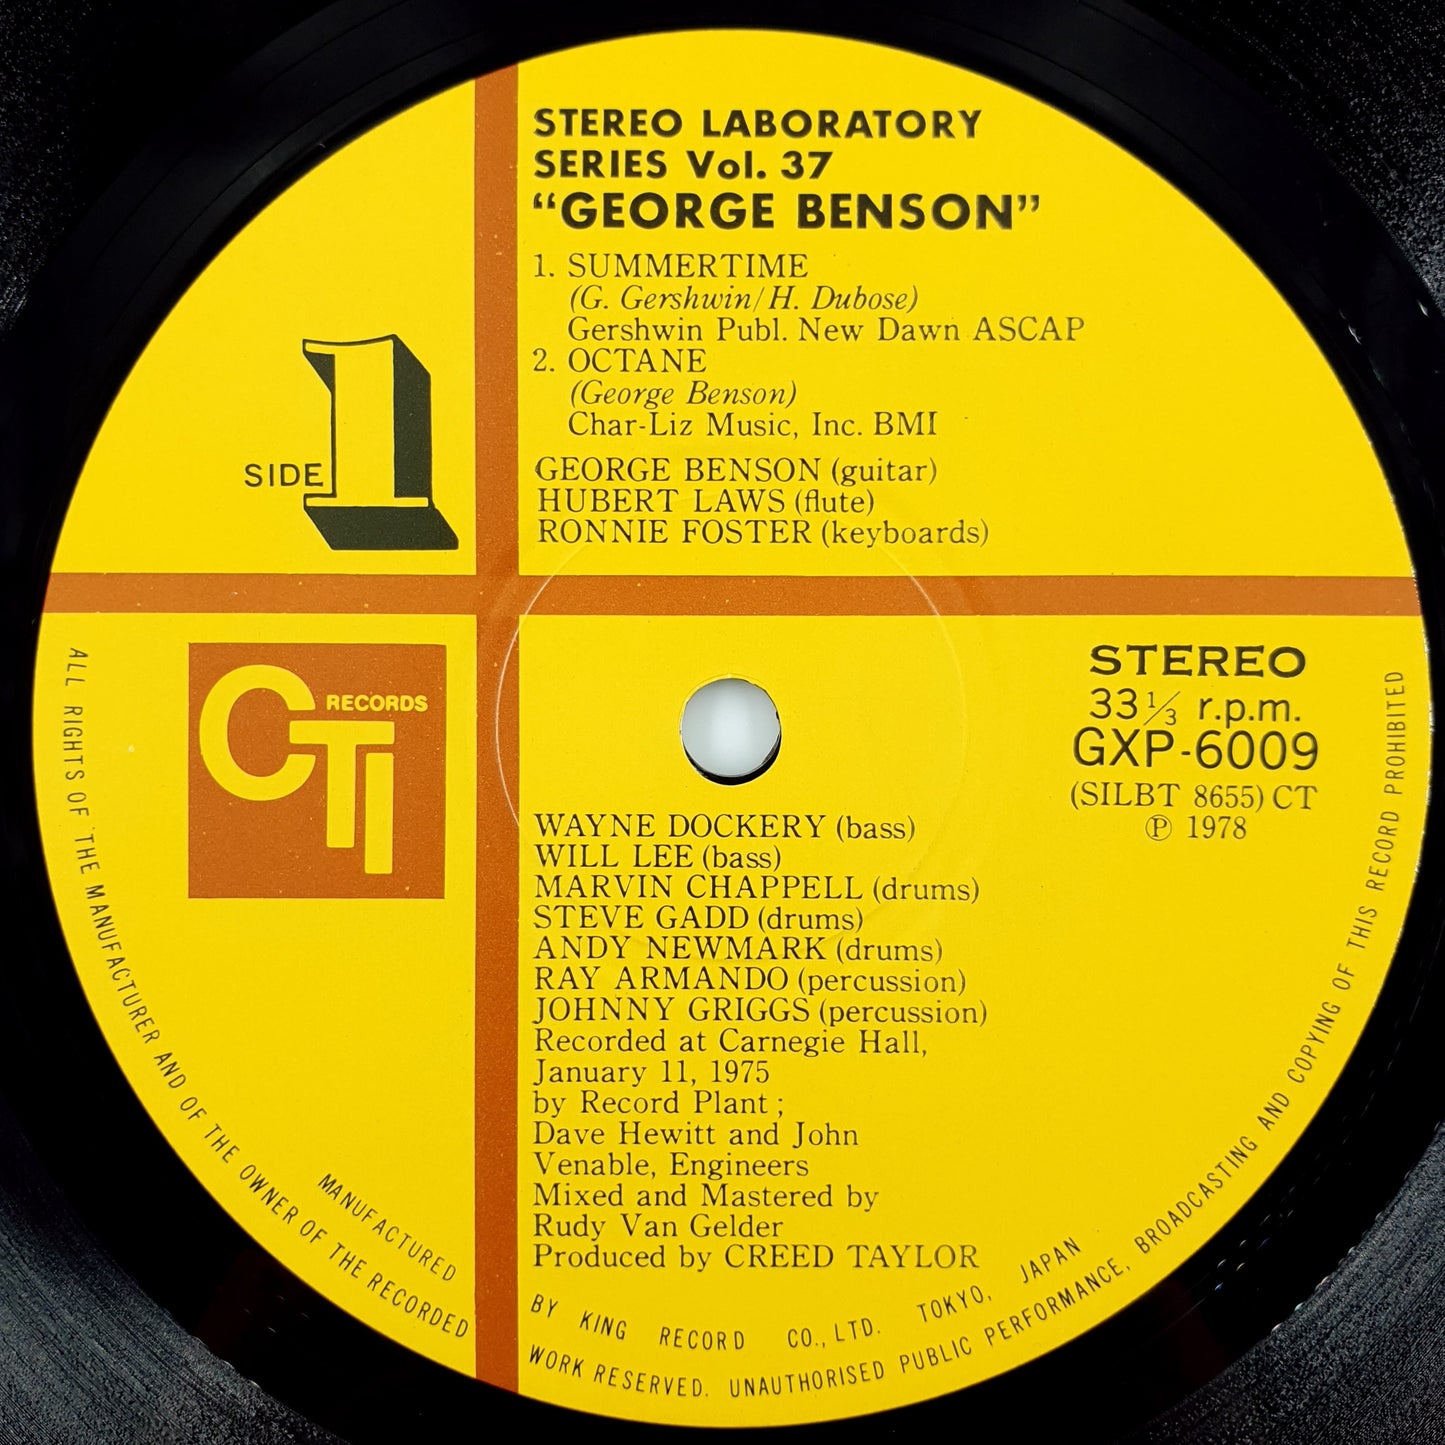 George Benson – Stereo Laboratory Vol. 37